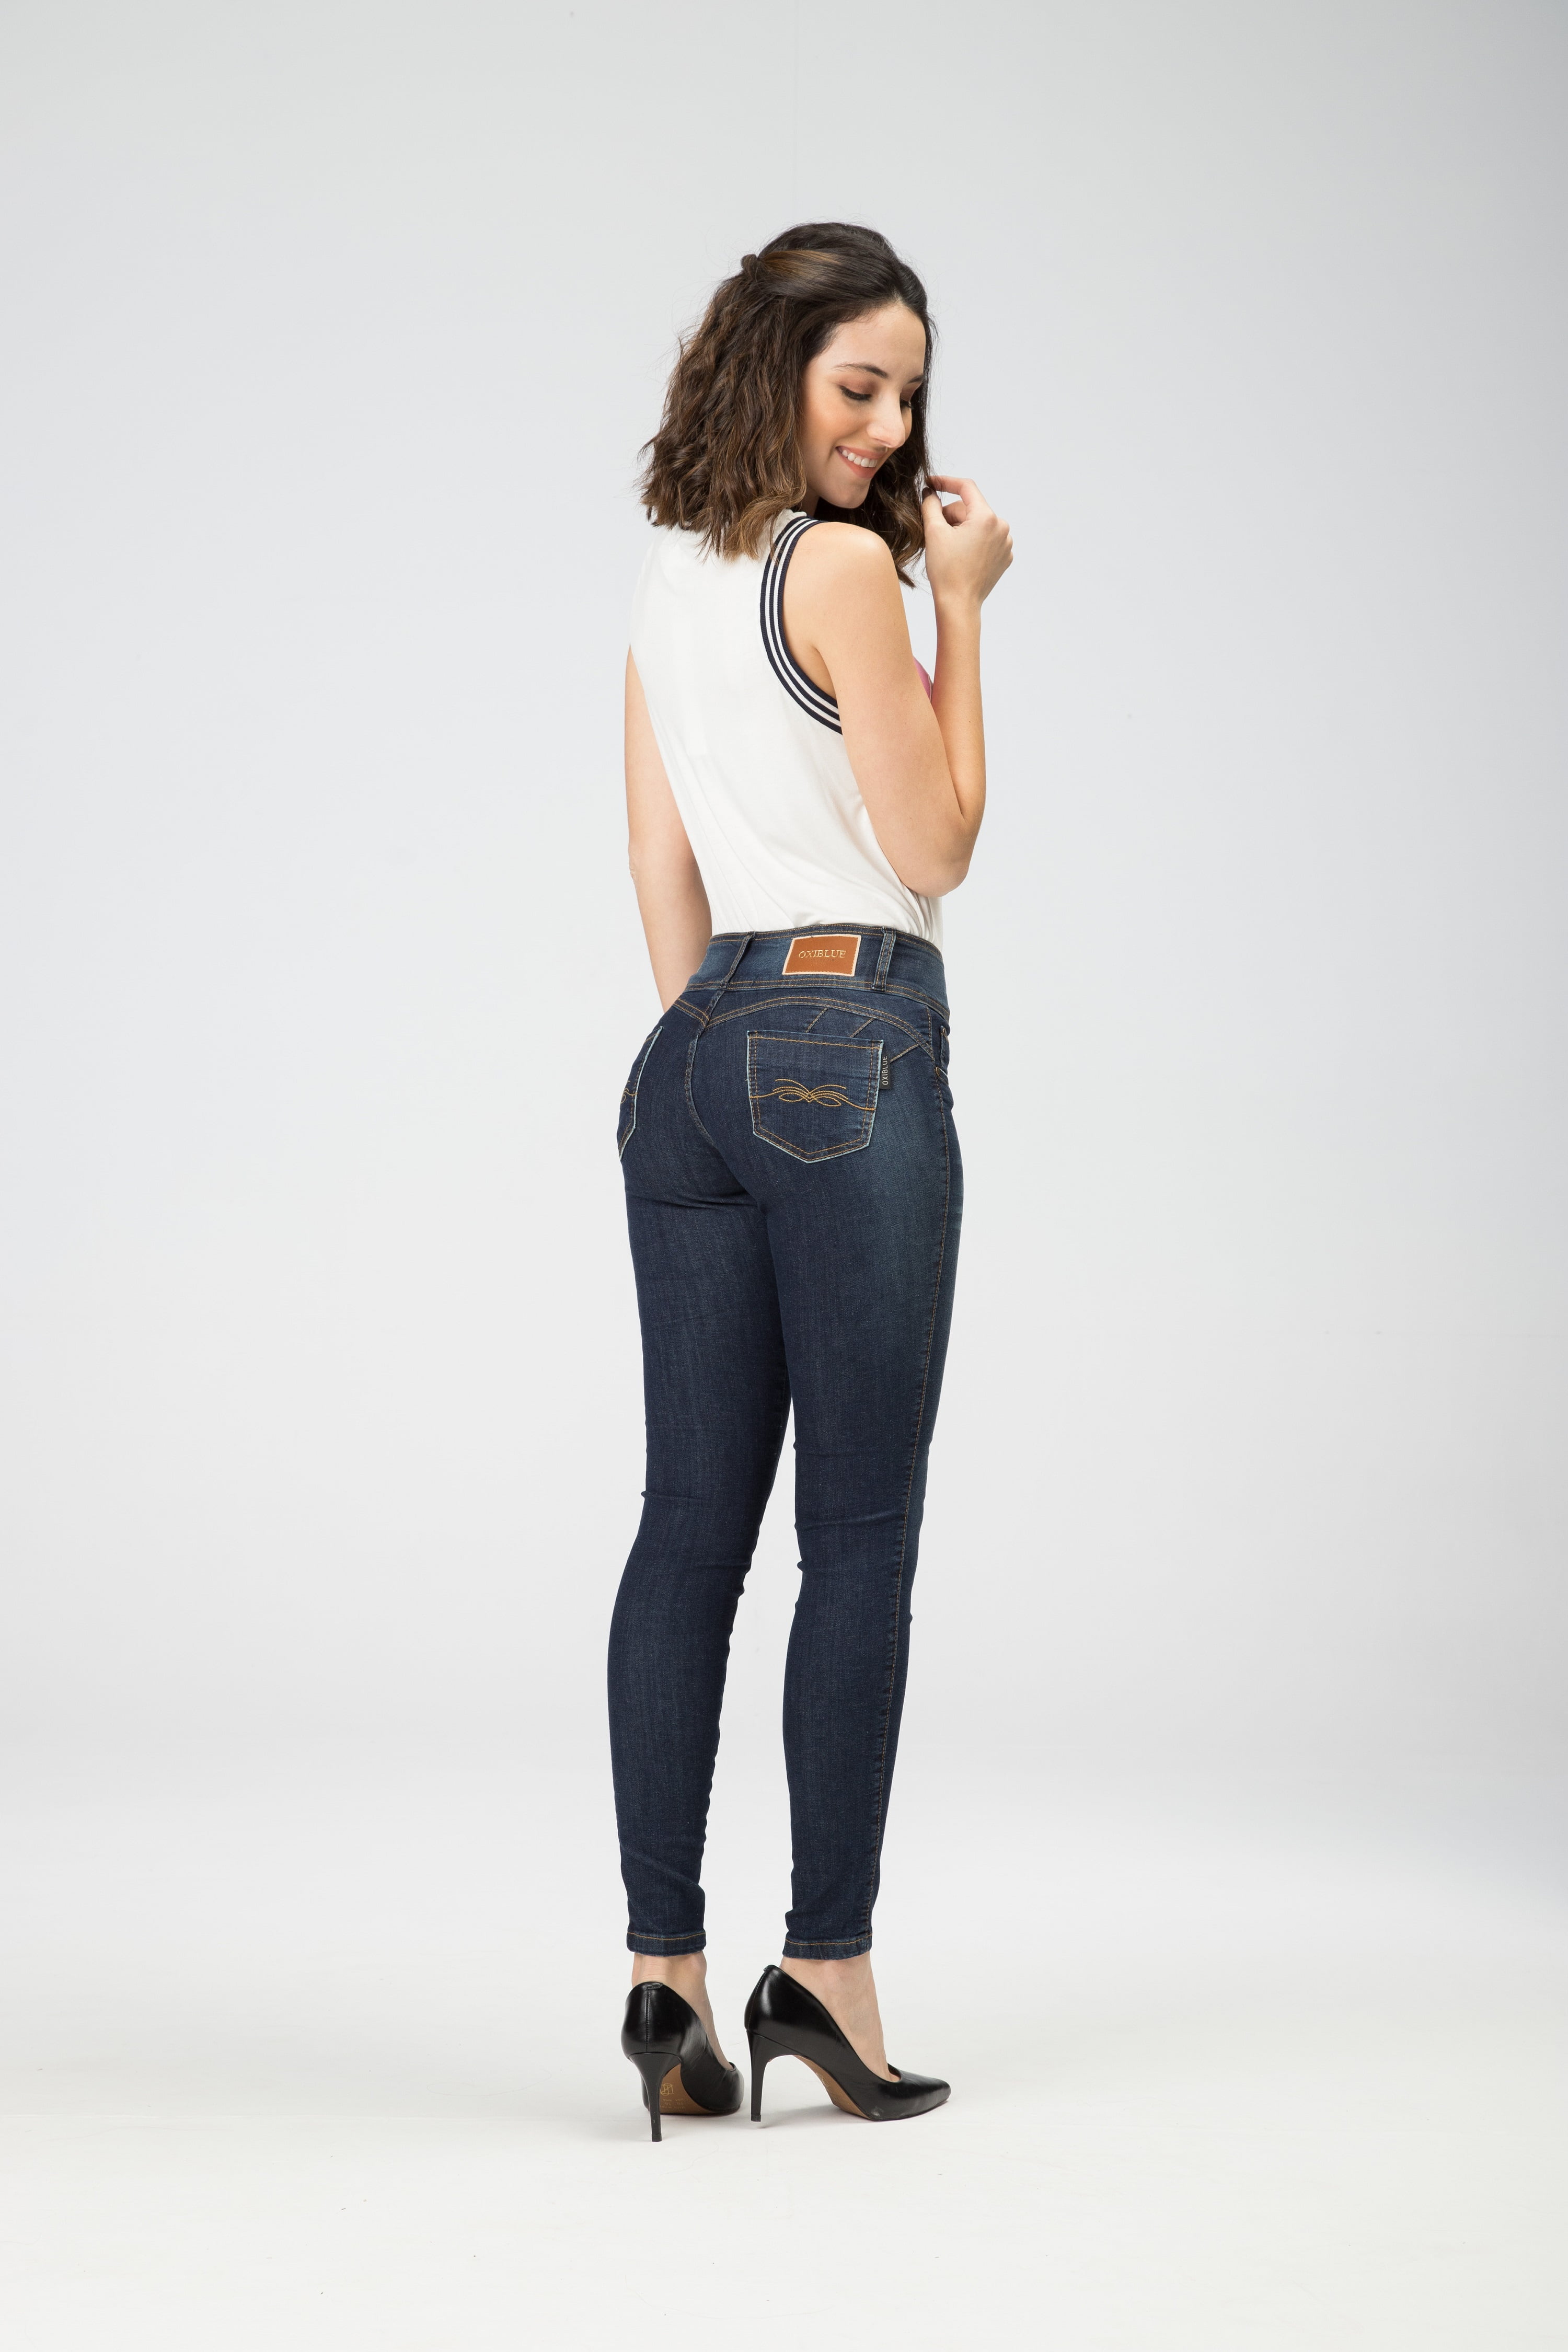 Calça Feminina Preta Skinny F2301002 - Oxiblue Jeans